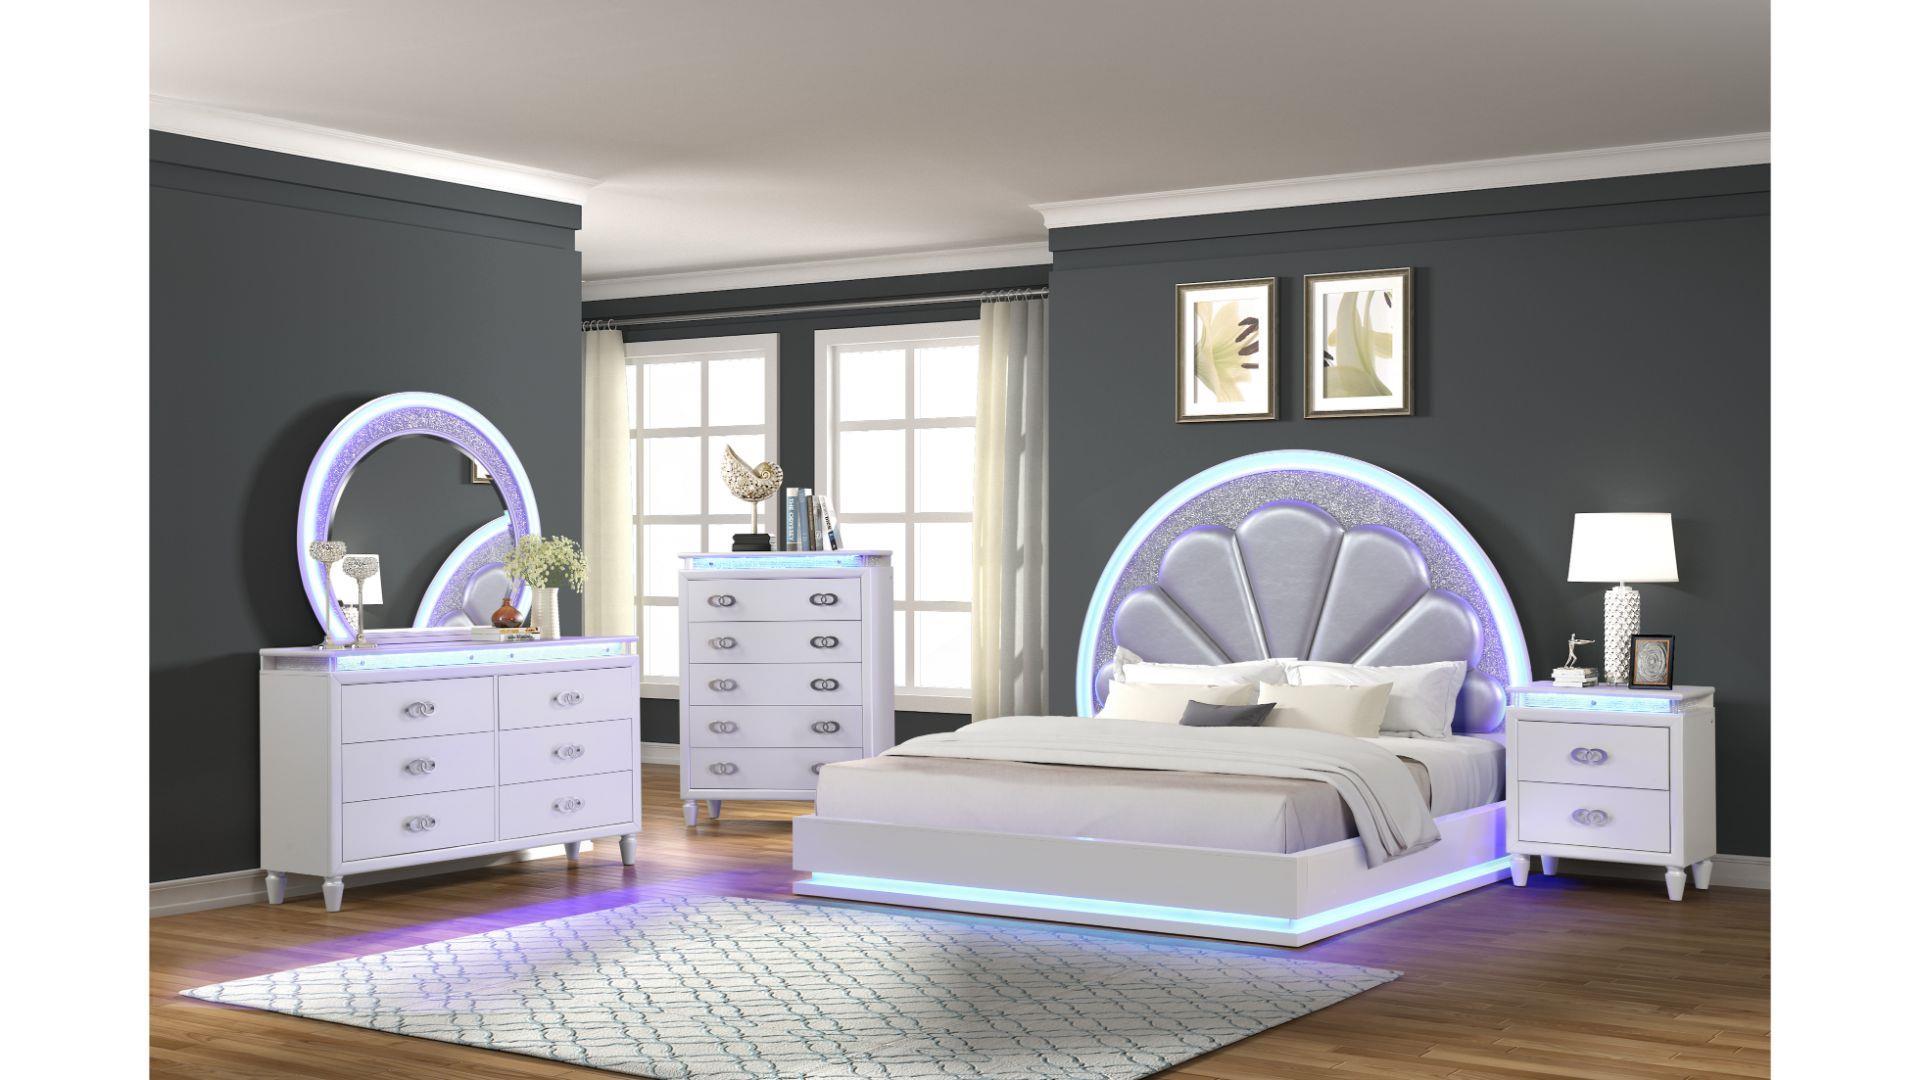 

    
Milky White Tufted King Led Bedroom Set 4Pcs PERLA Galaxy Home Contemporary
